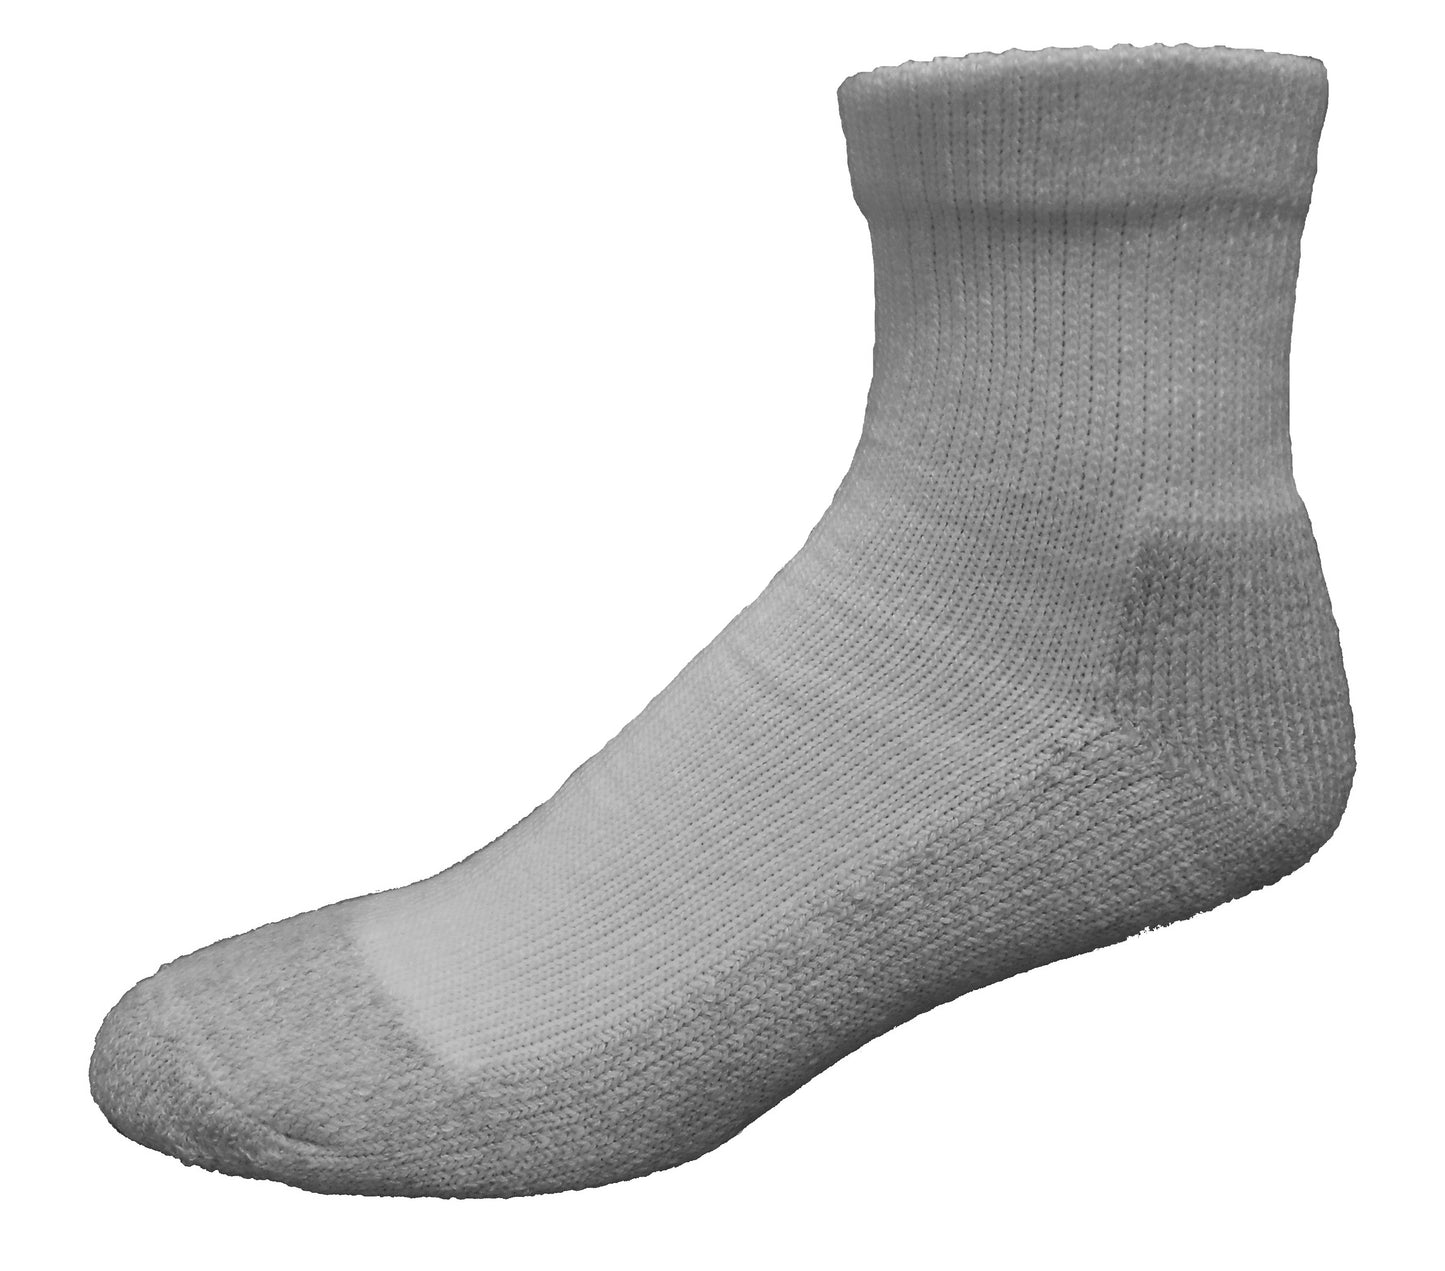 Cushees Comfort™ Ankle Socks,  Triple Thick w/ grey bottom